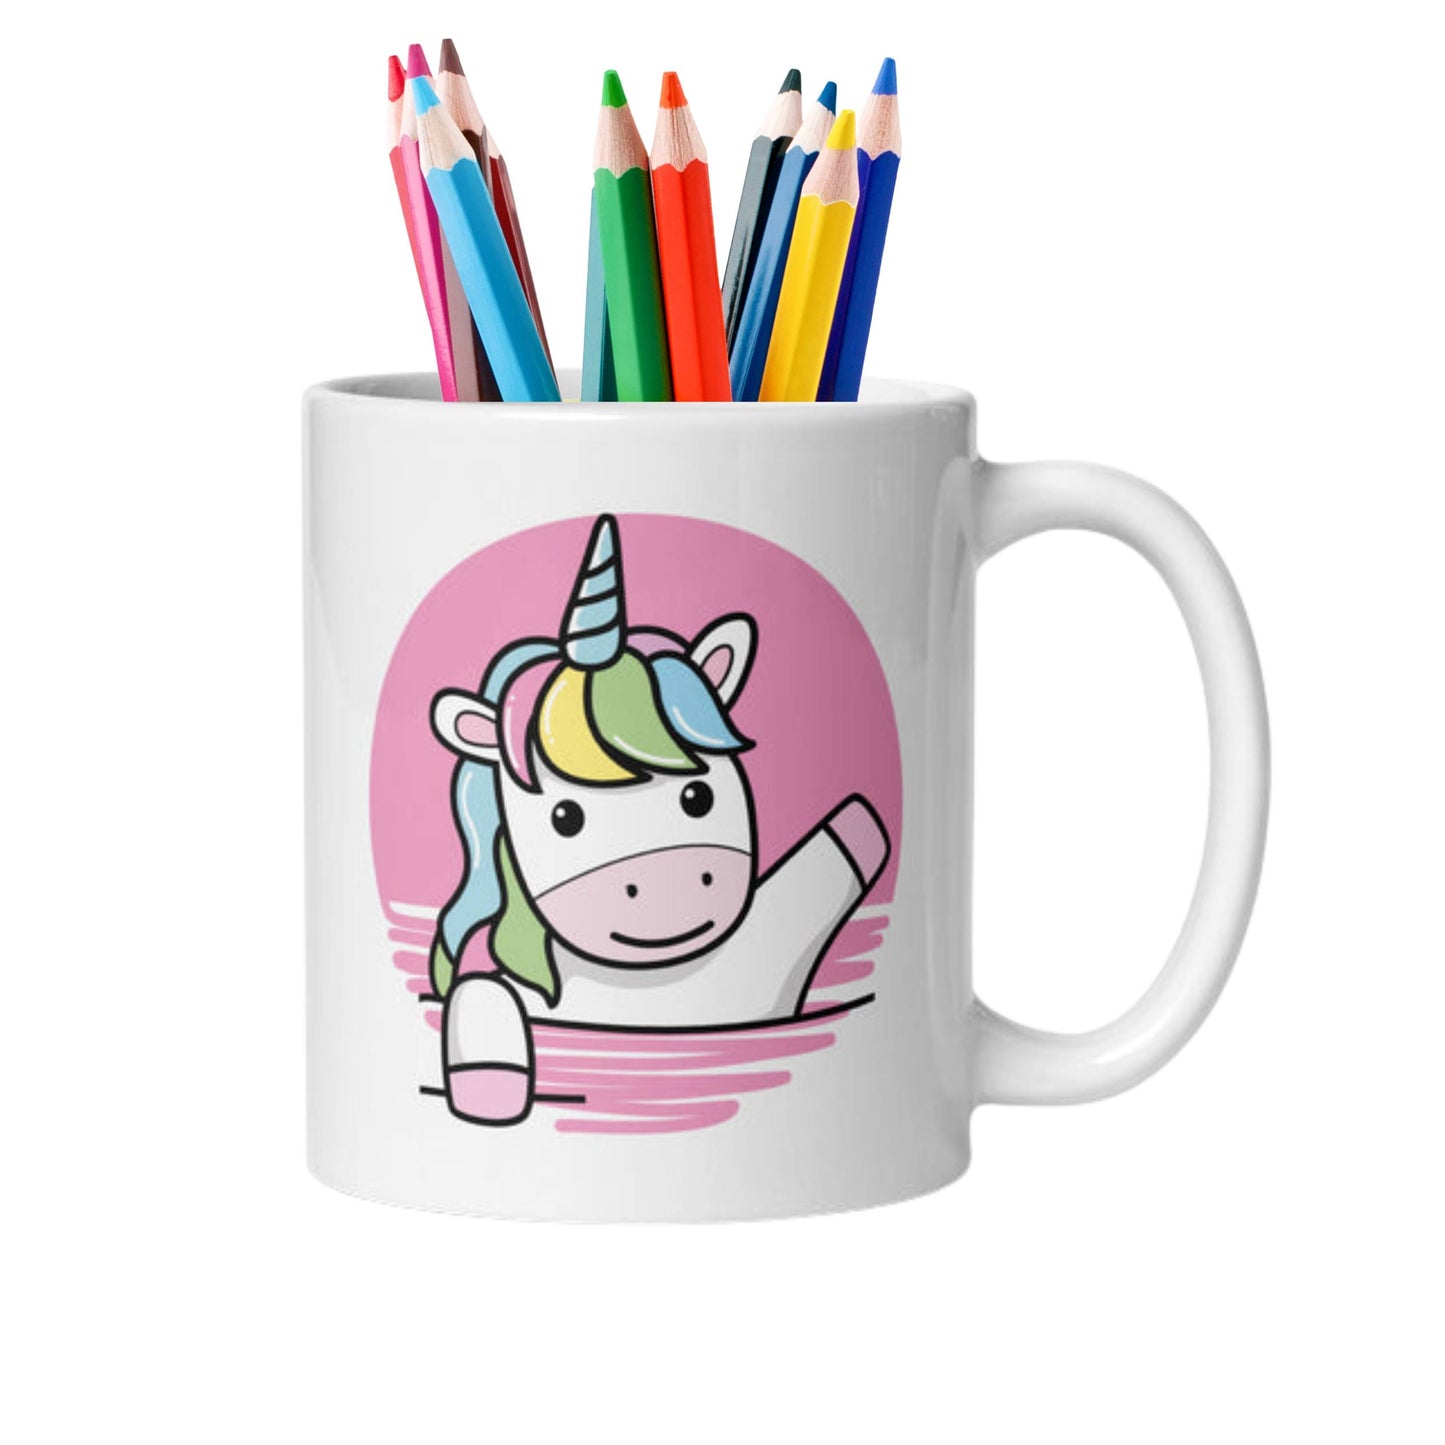 Unicorn | White Glossy Mug